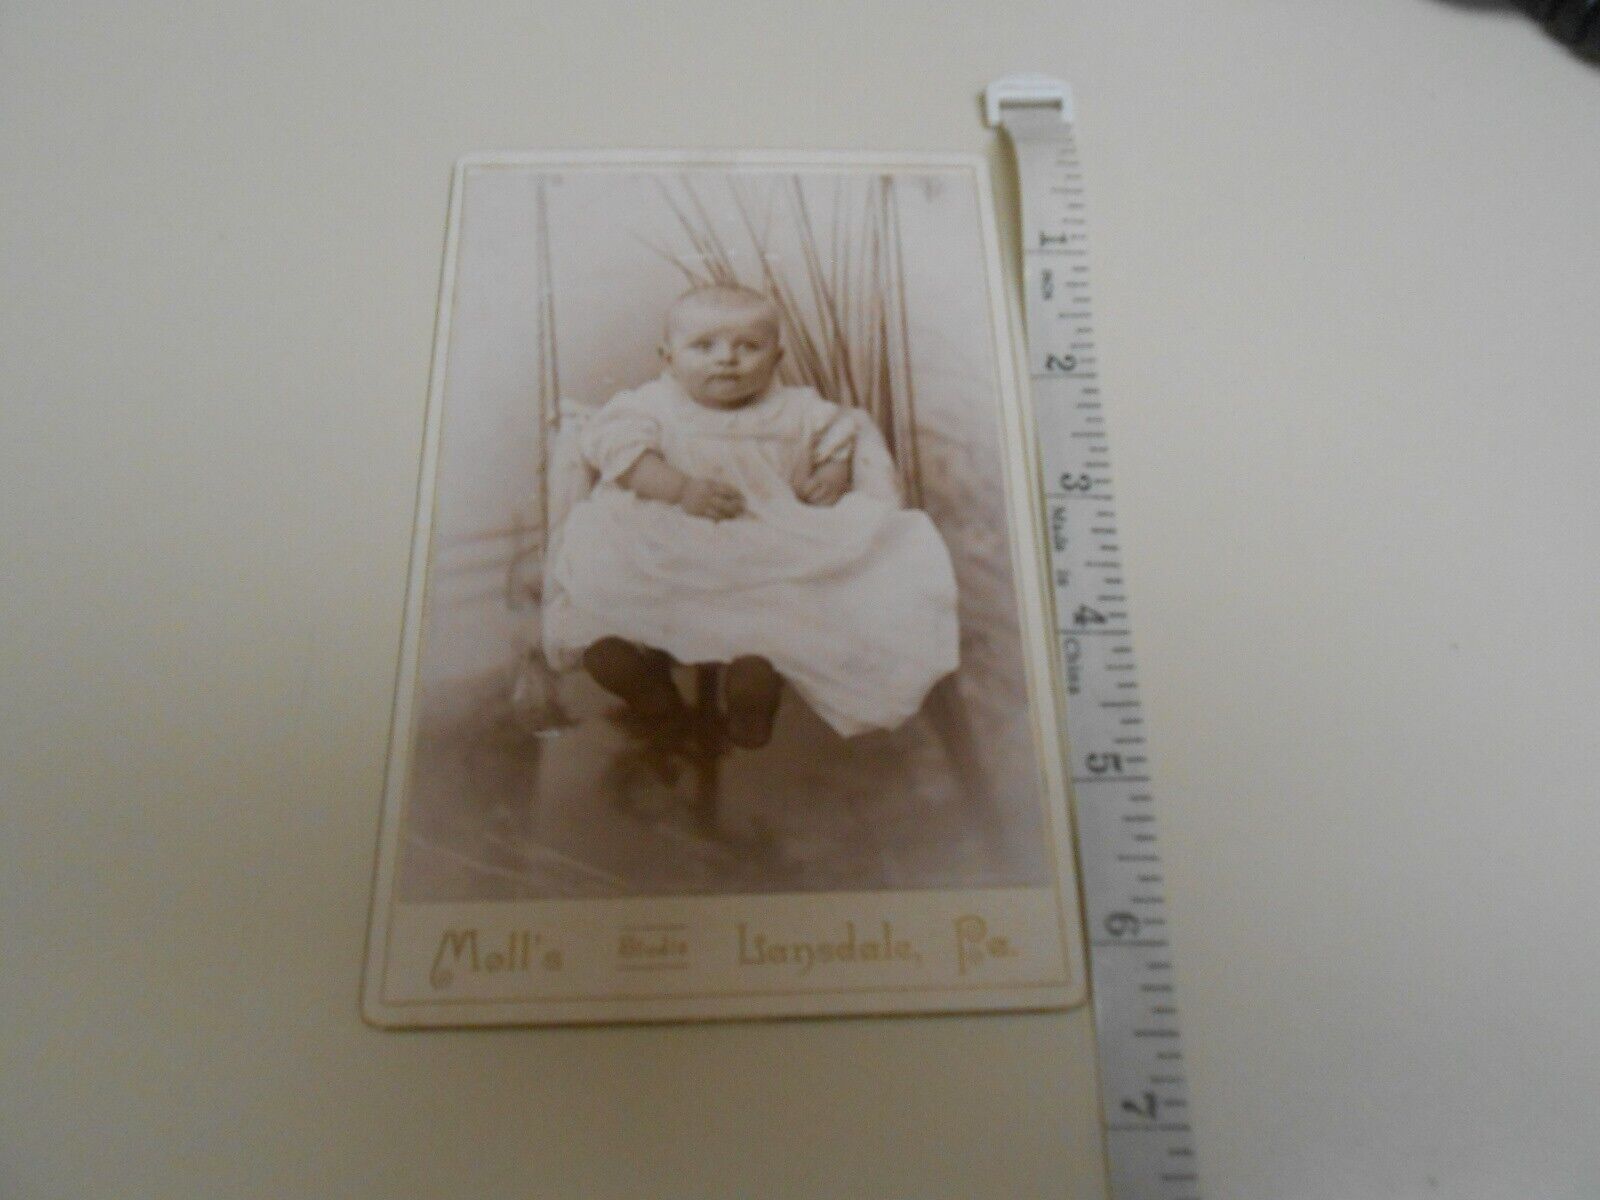 Moll\'s Studio Lansdale Pennsylvania Circa 1910 Baby Cabinet Card Photo